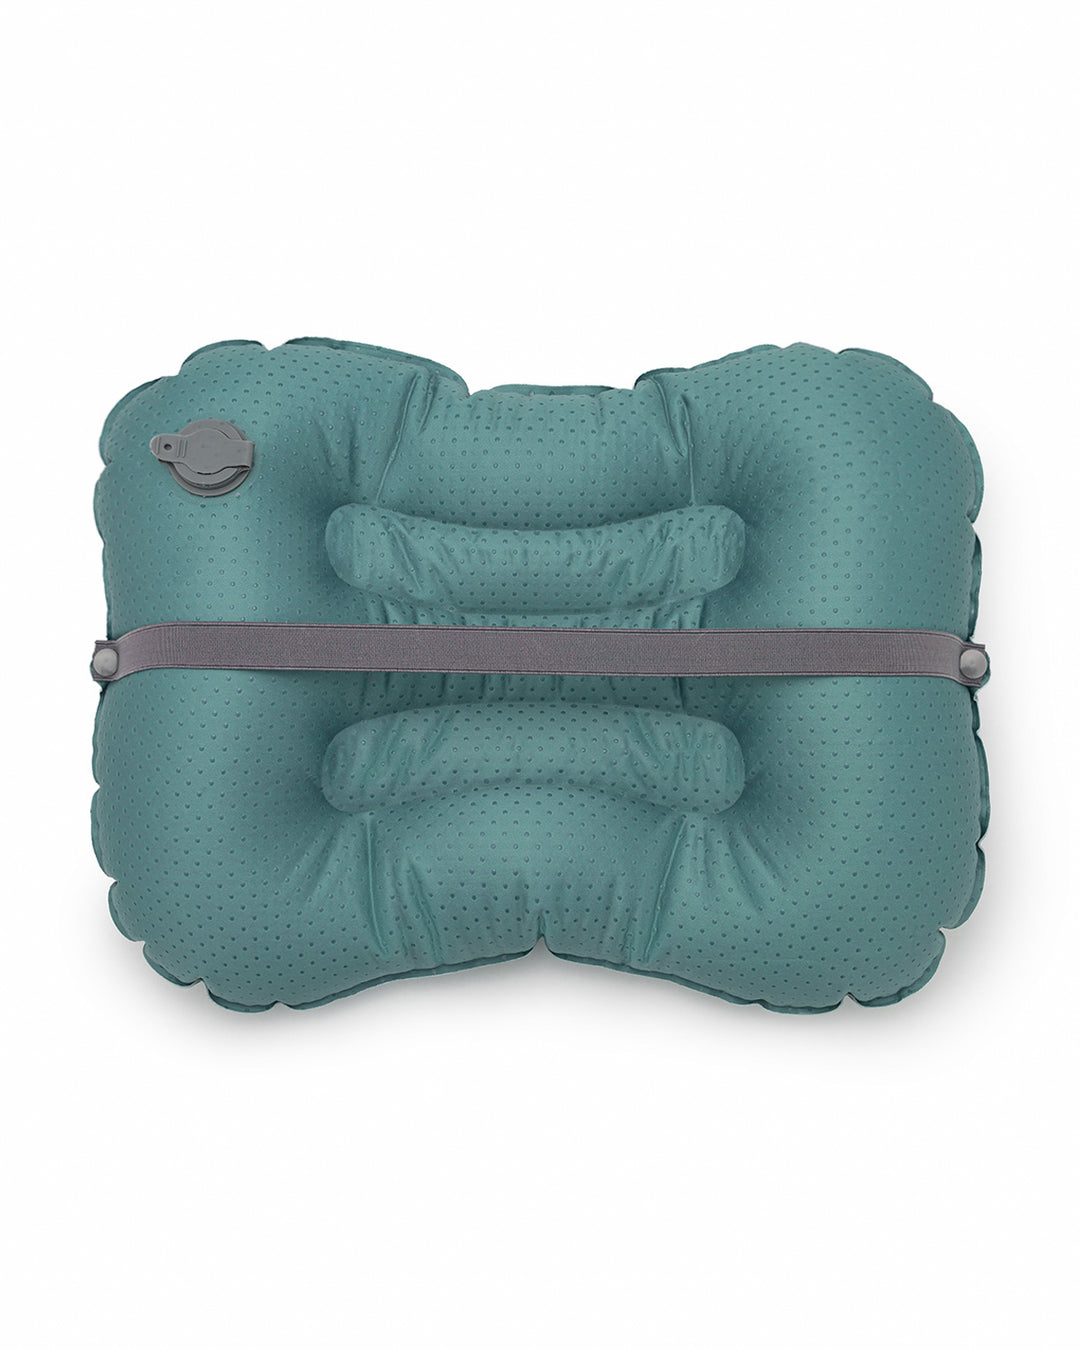 Inflatable Seat Cushion - Dark mint